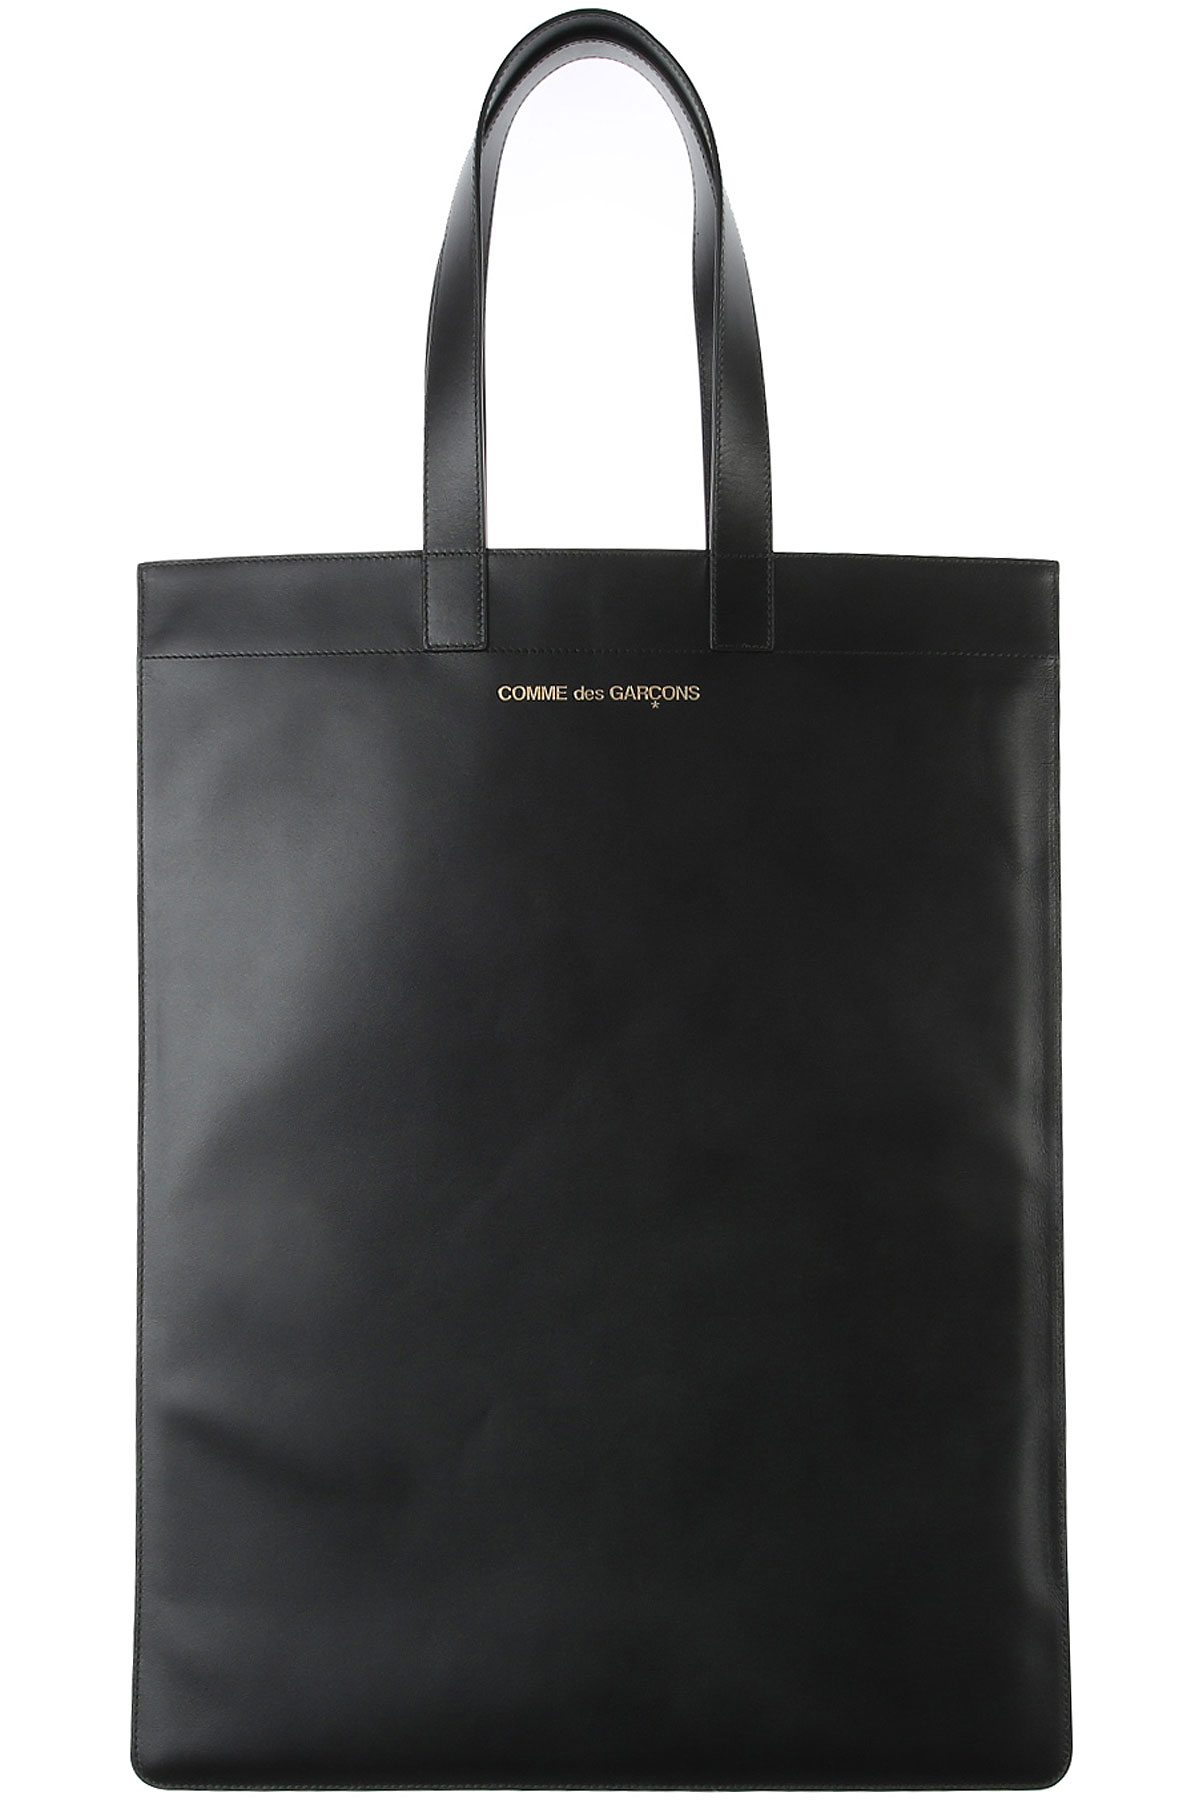 Handbags Comme des Garcons, Style code: sa9002-nero-